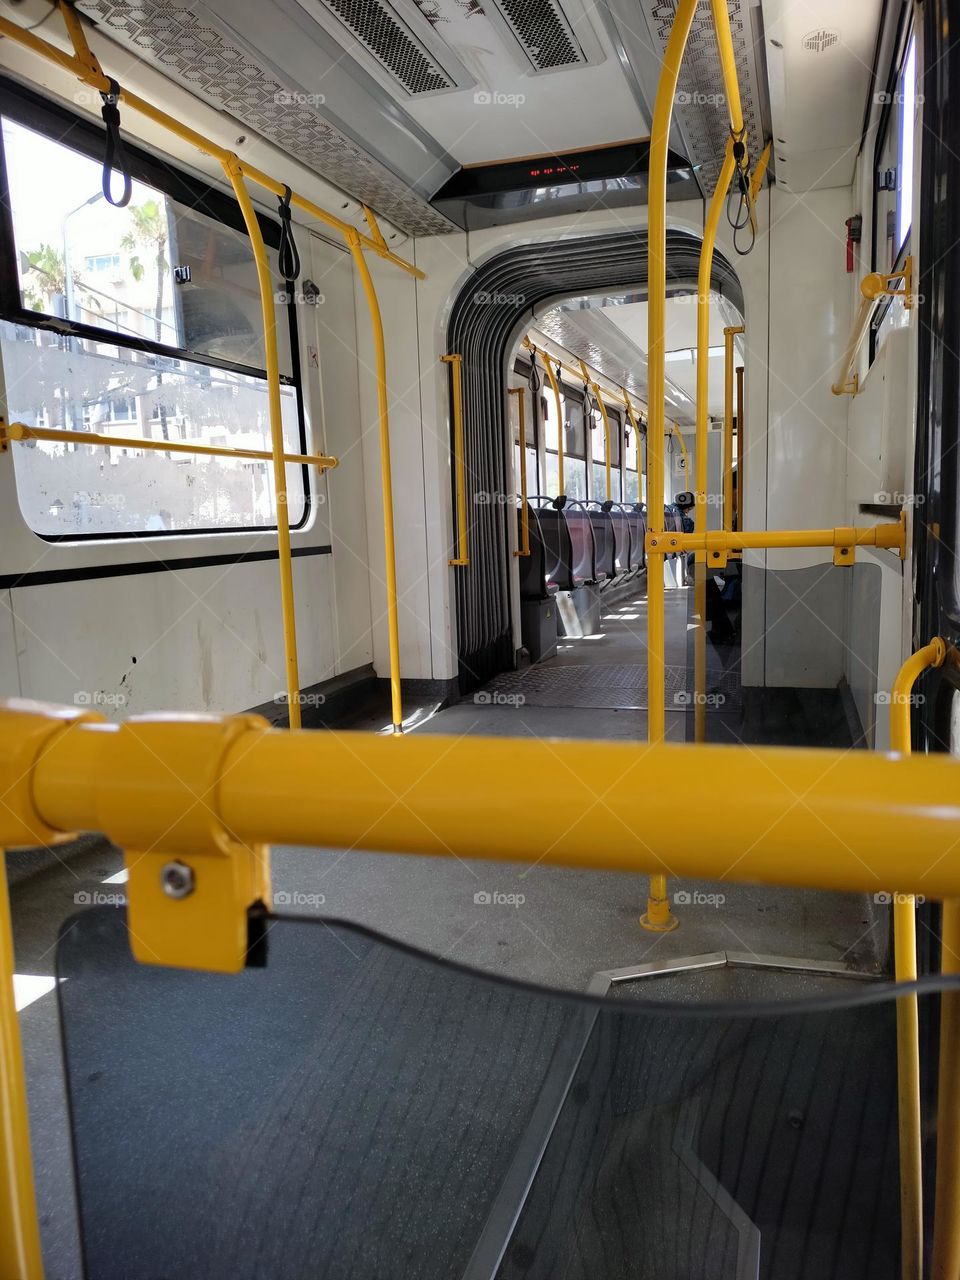 inside public transport called tram